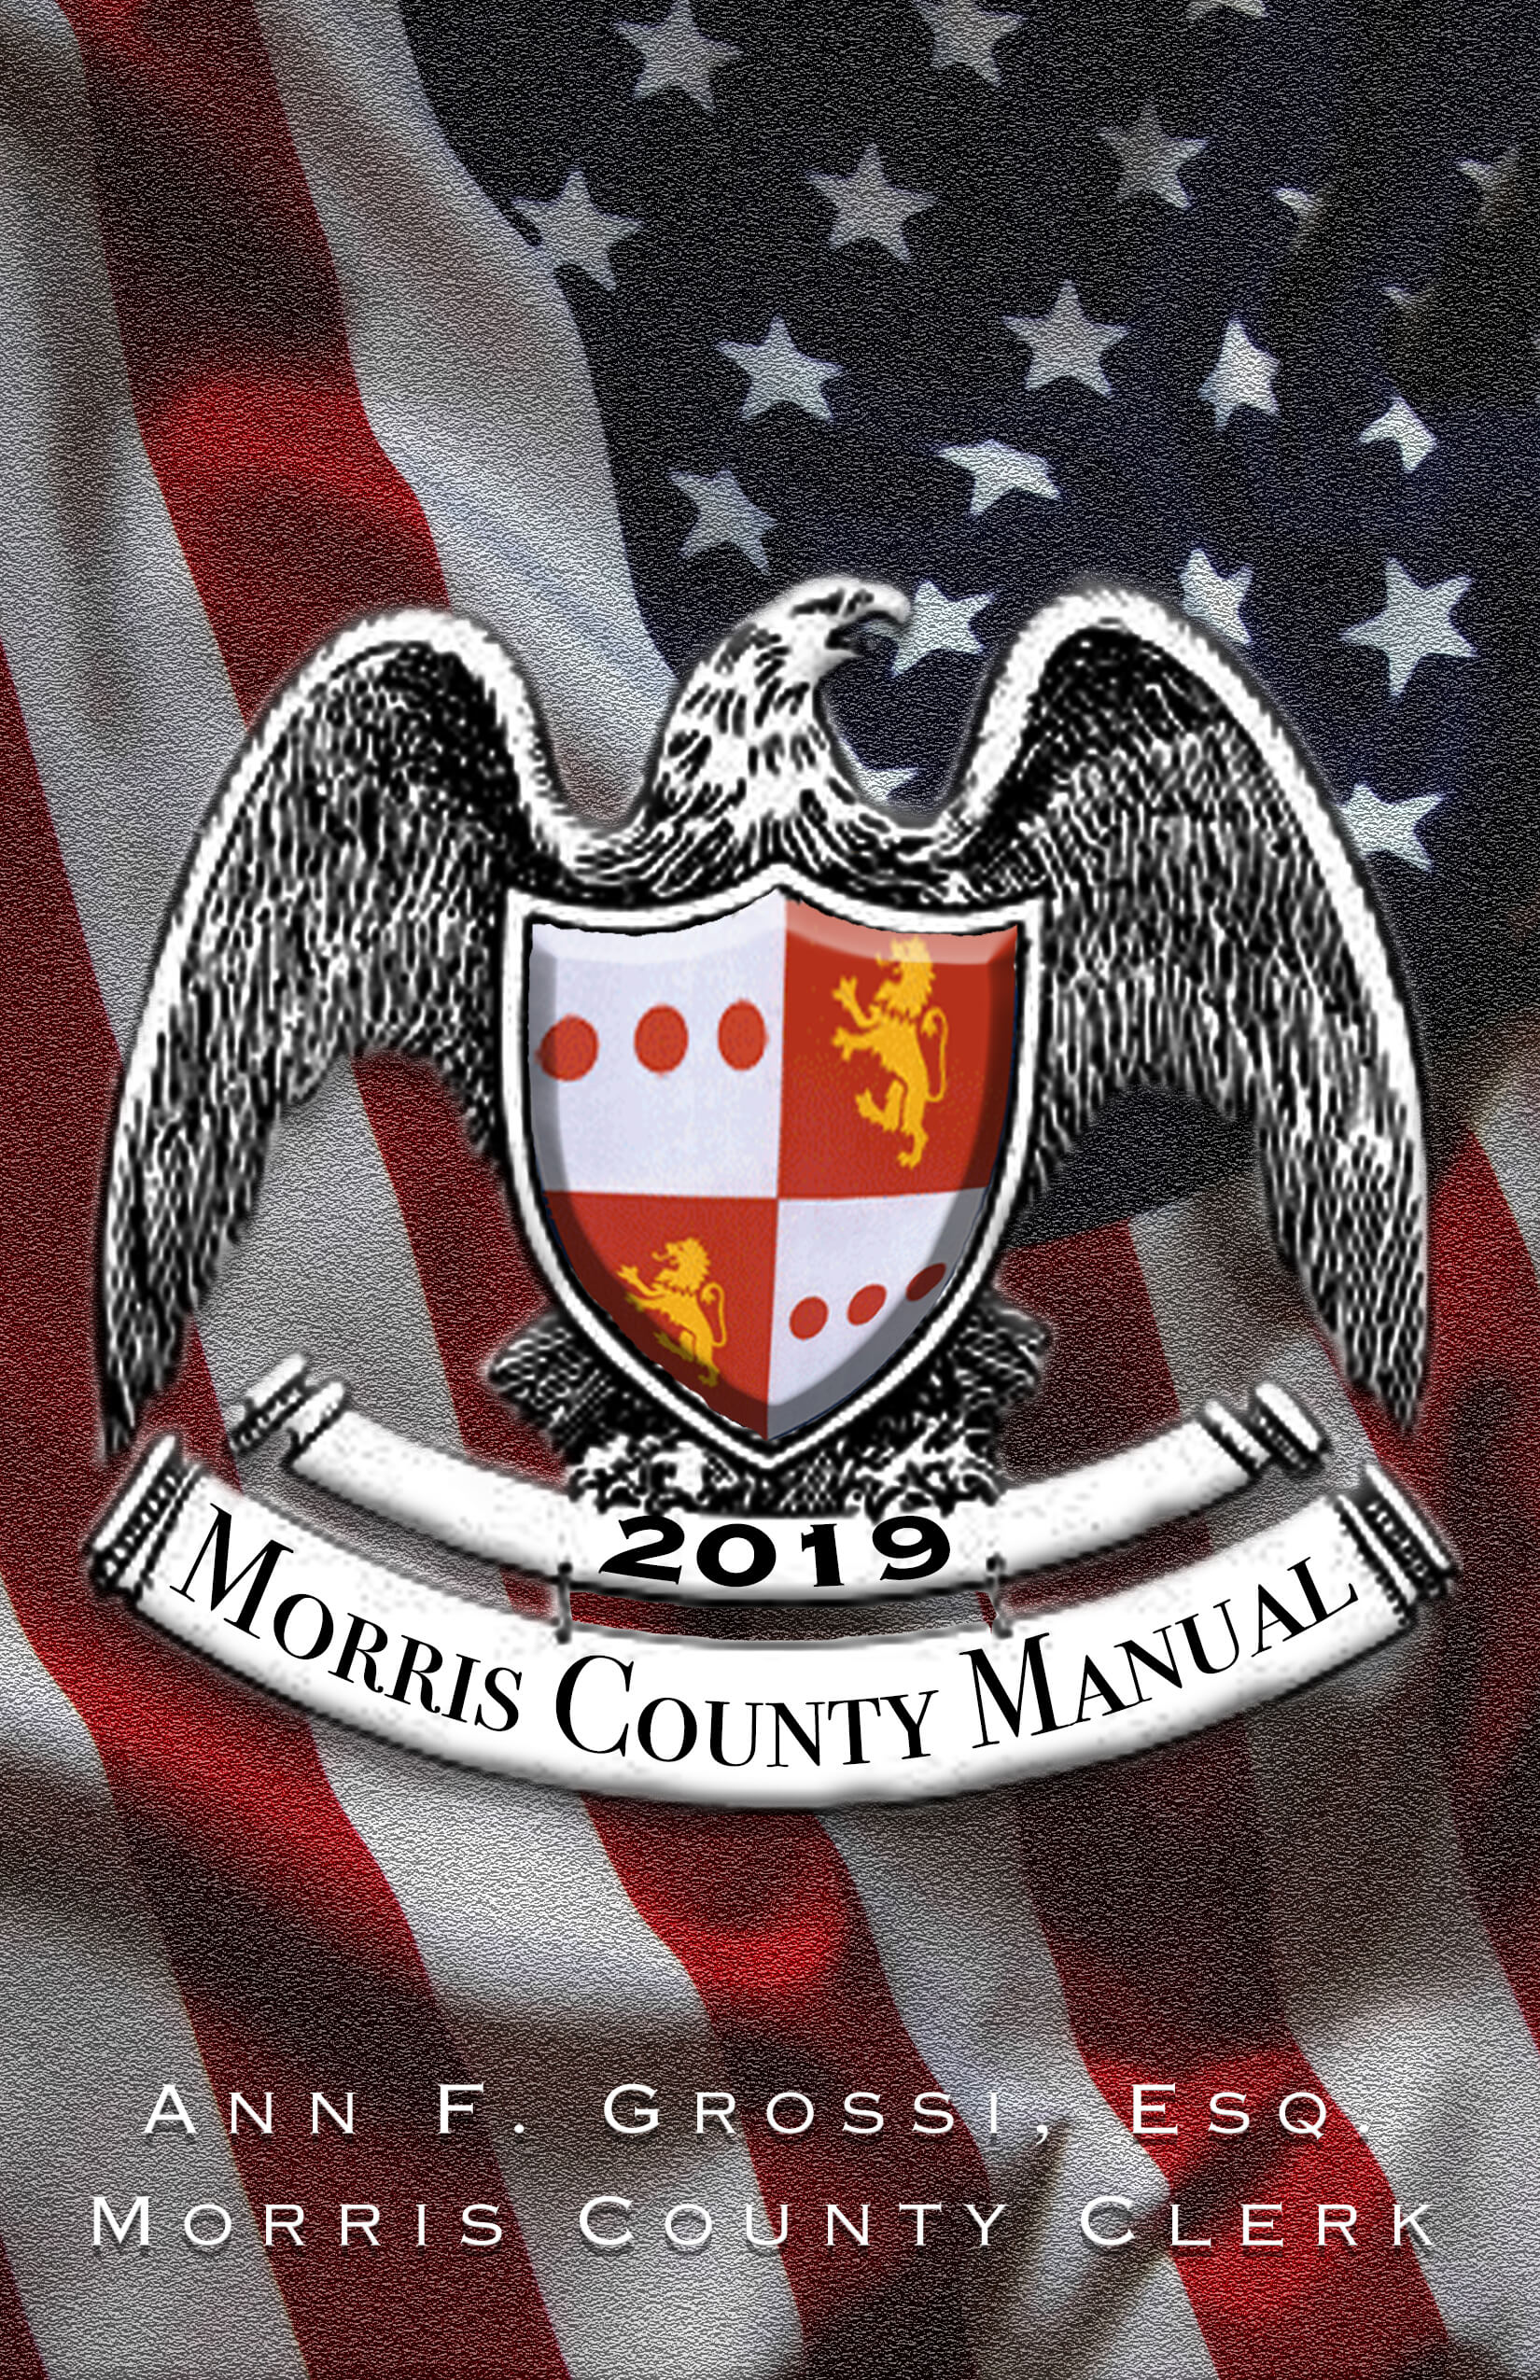 2019 Morris County Manual cover image